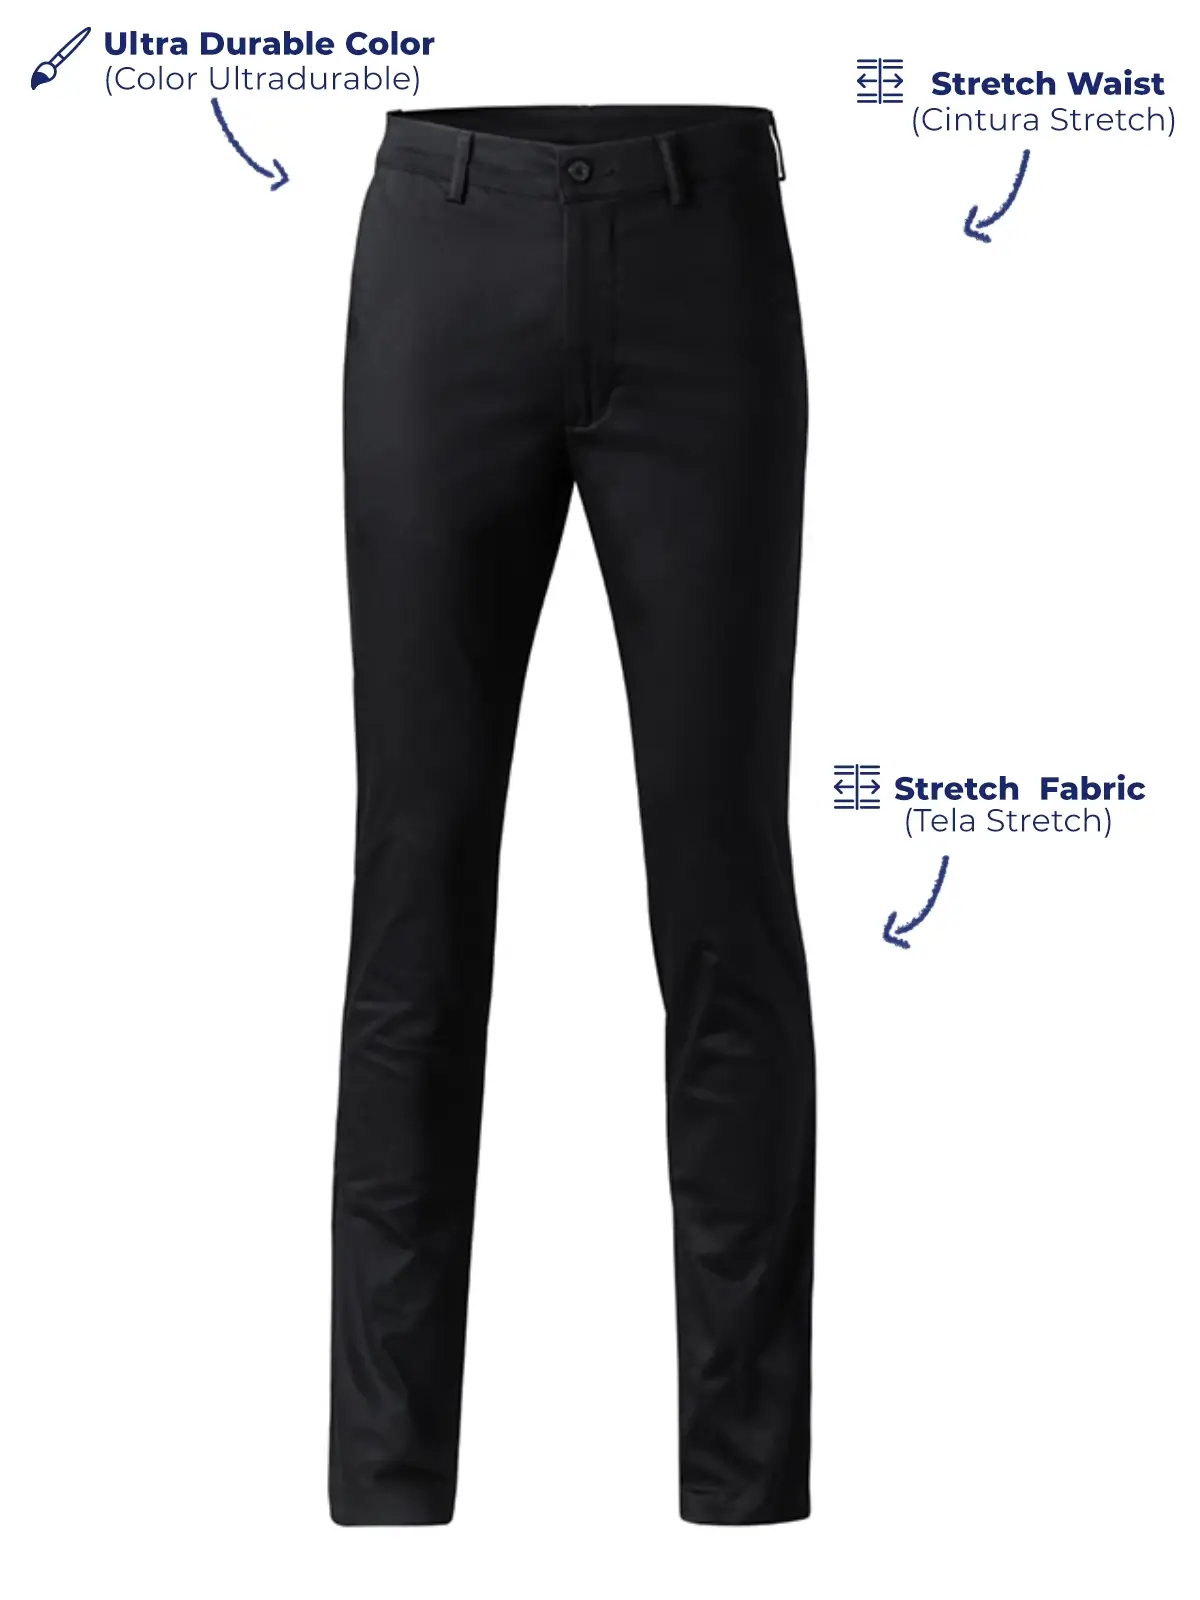 Pantalones ejecutivos color negro